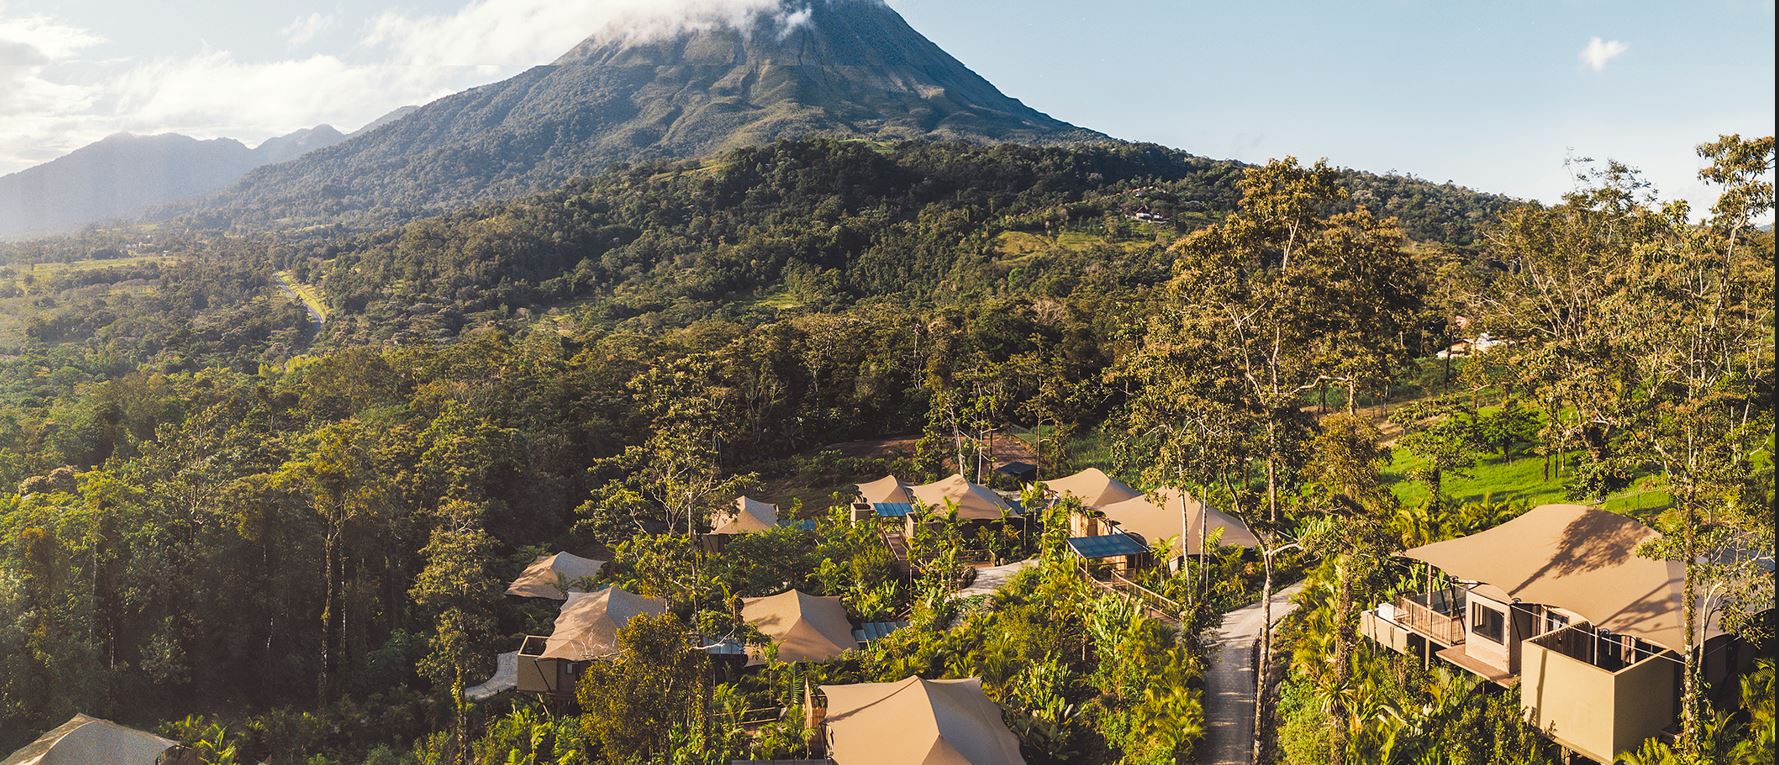 5 of the Best Luxury Wellness Retreats in Costa Rica